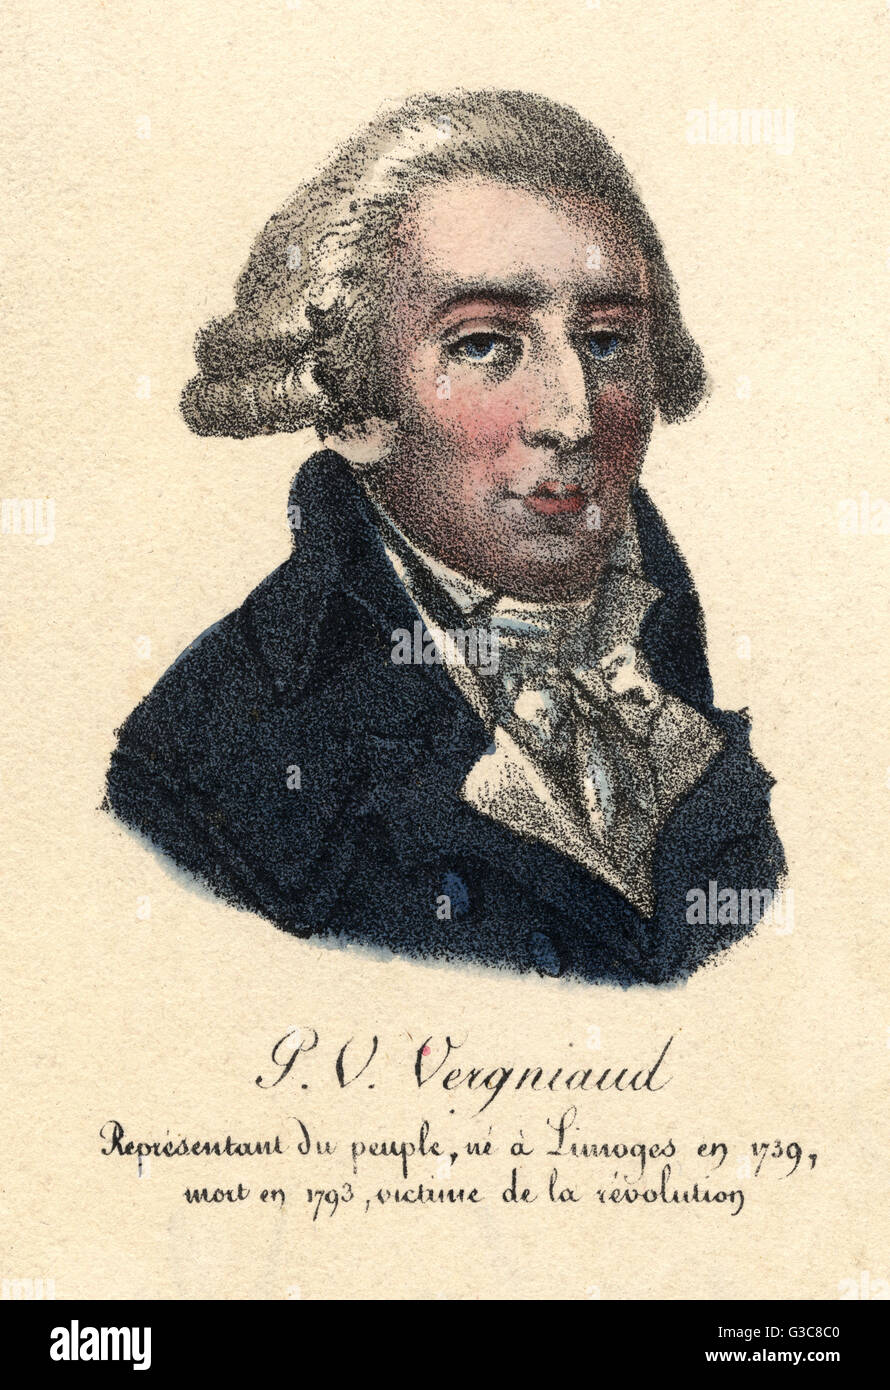 PIERRE VICTURNIEN VERGNIAUD French revolutionary  statesman, 'victime de la  revolution'       Date: 1753 - 1793 Stock Photo